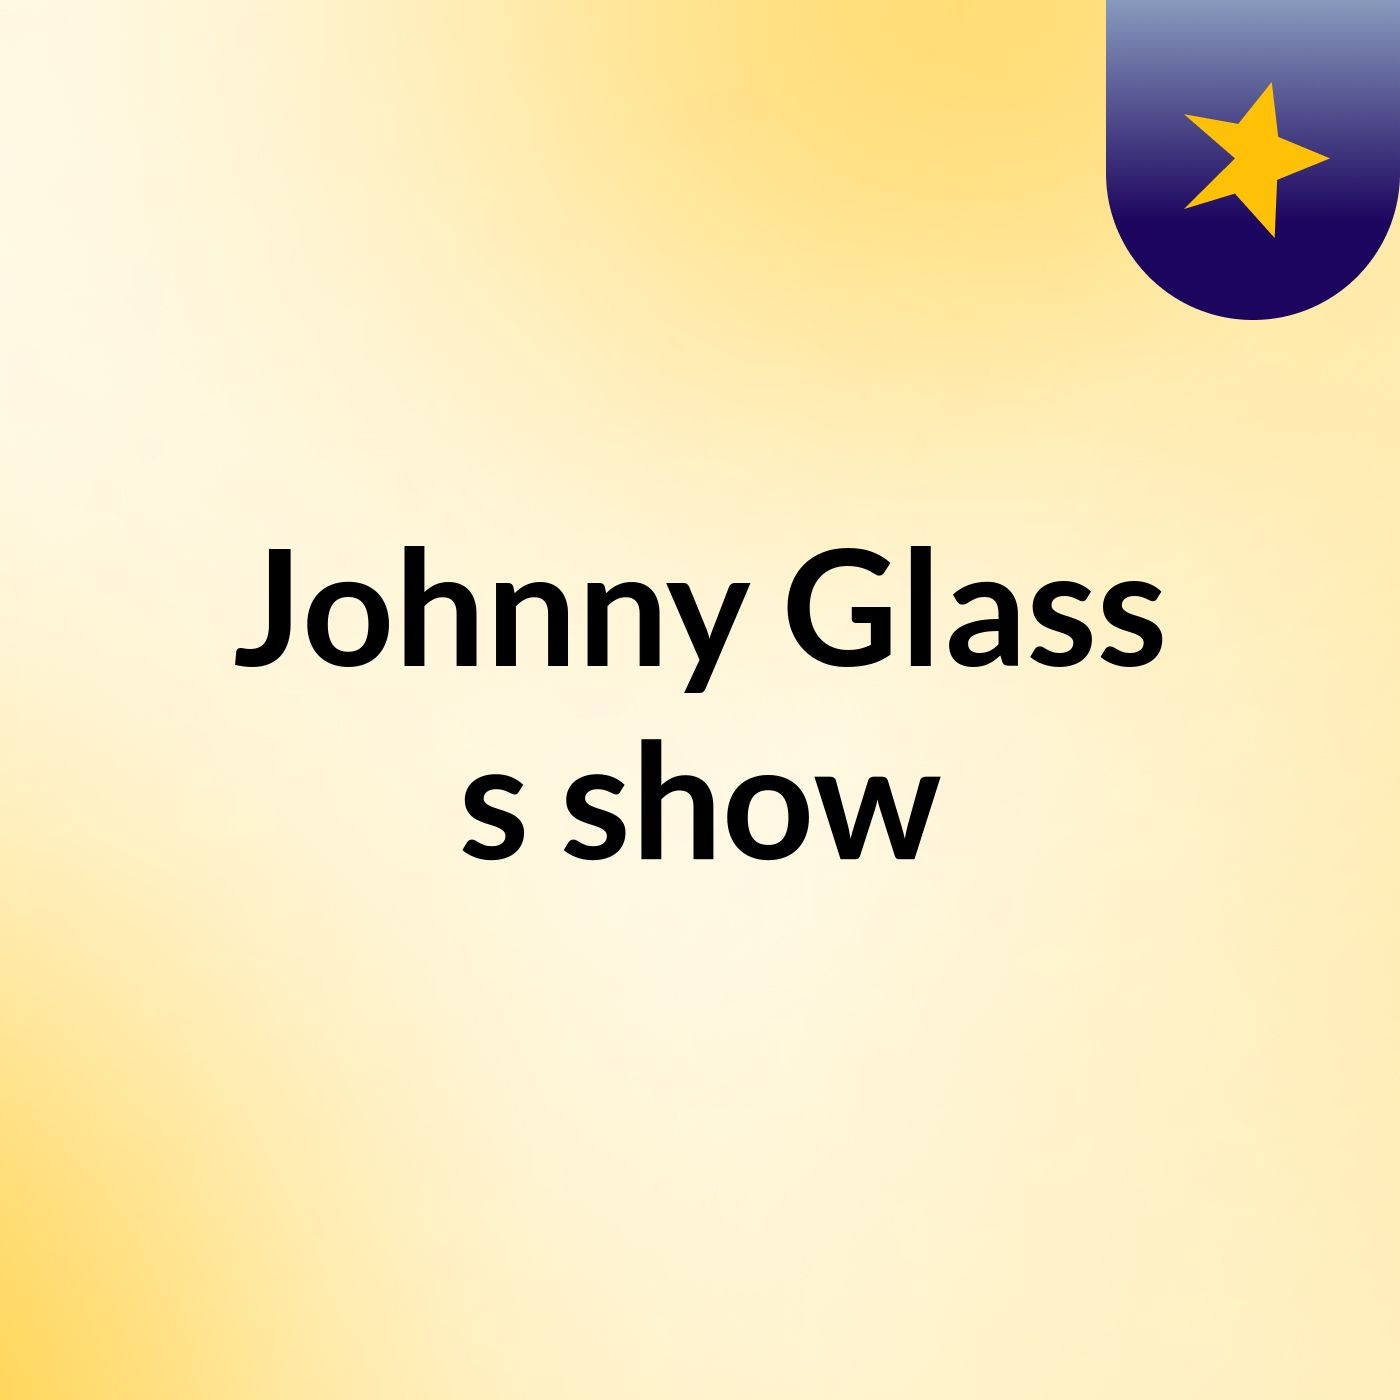 Johnny Glass's show